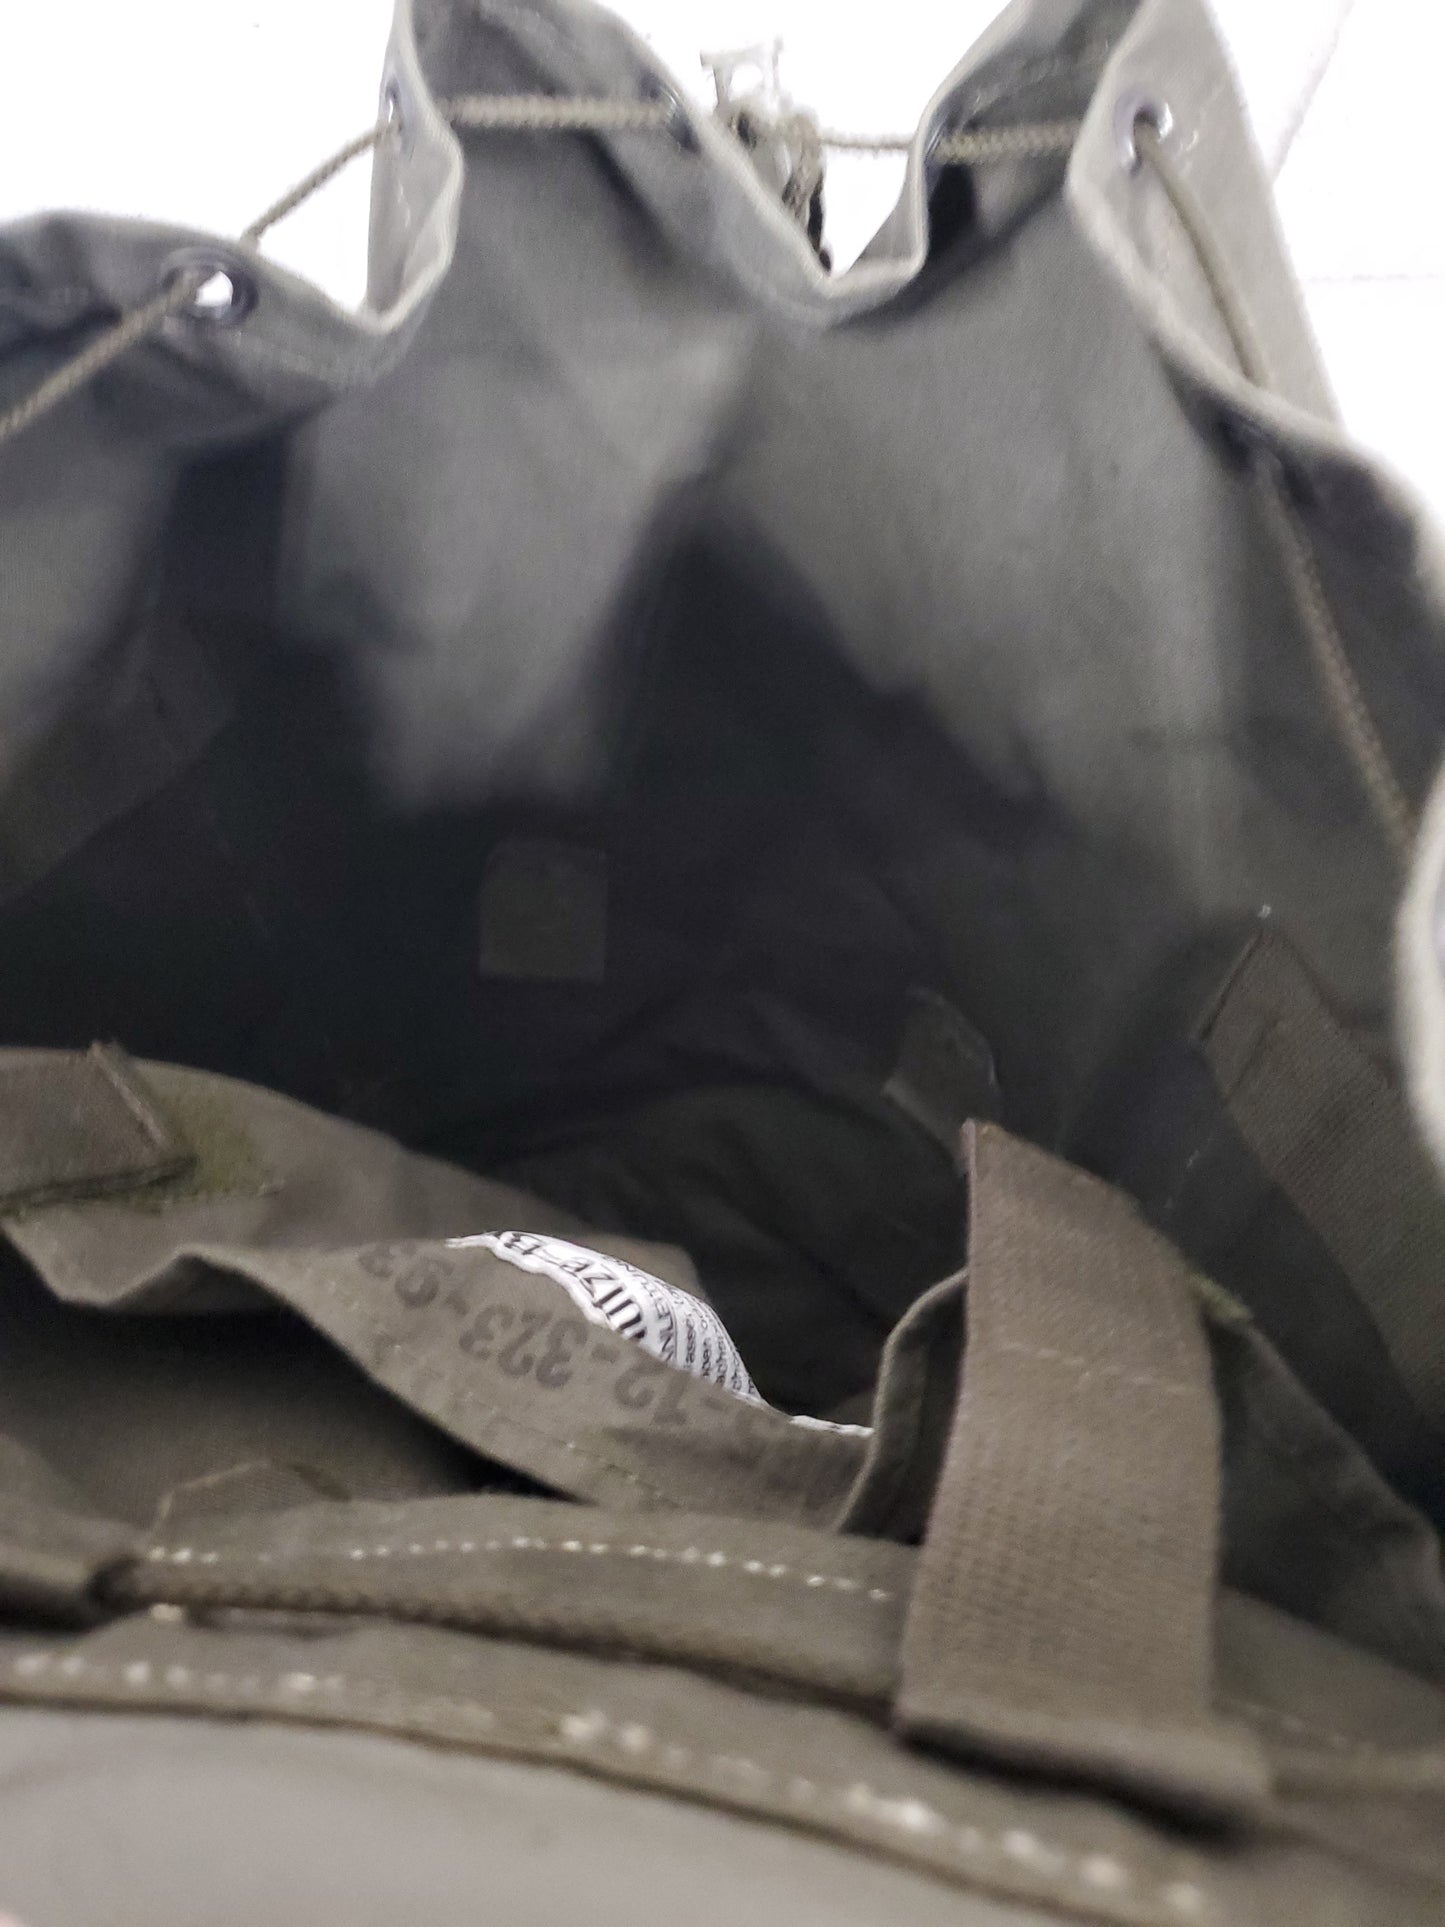 German Army Mountain Rucksack Bag Backpack Olive Green